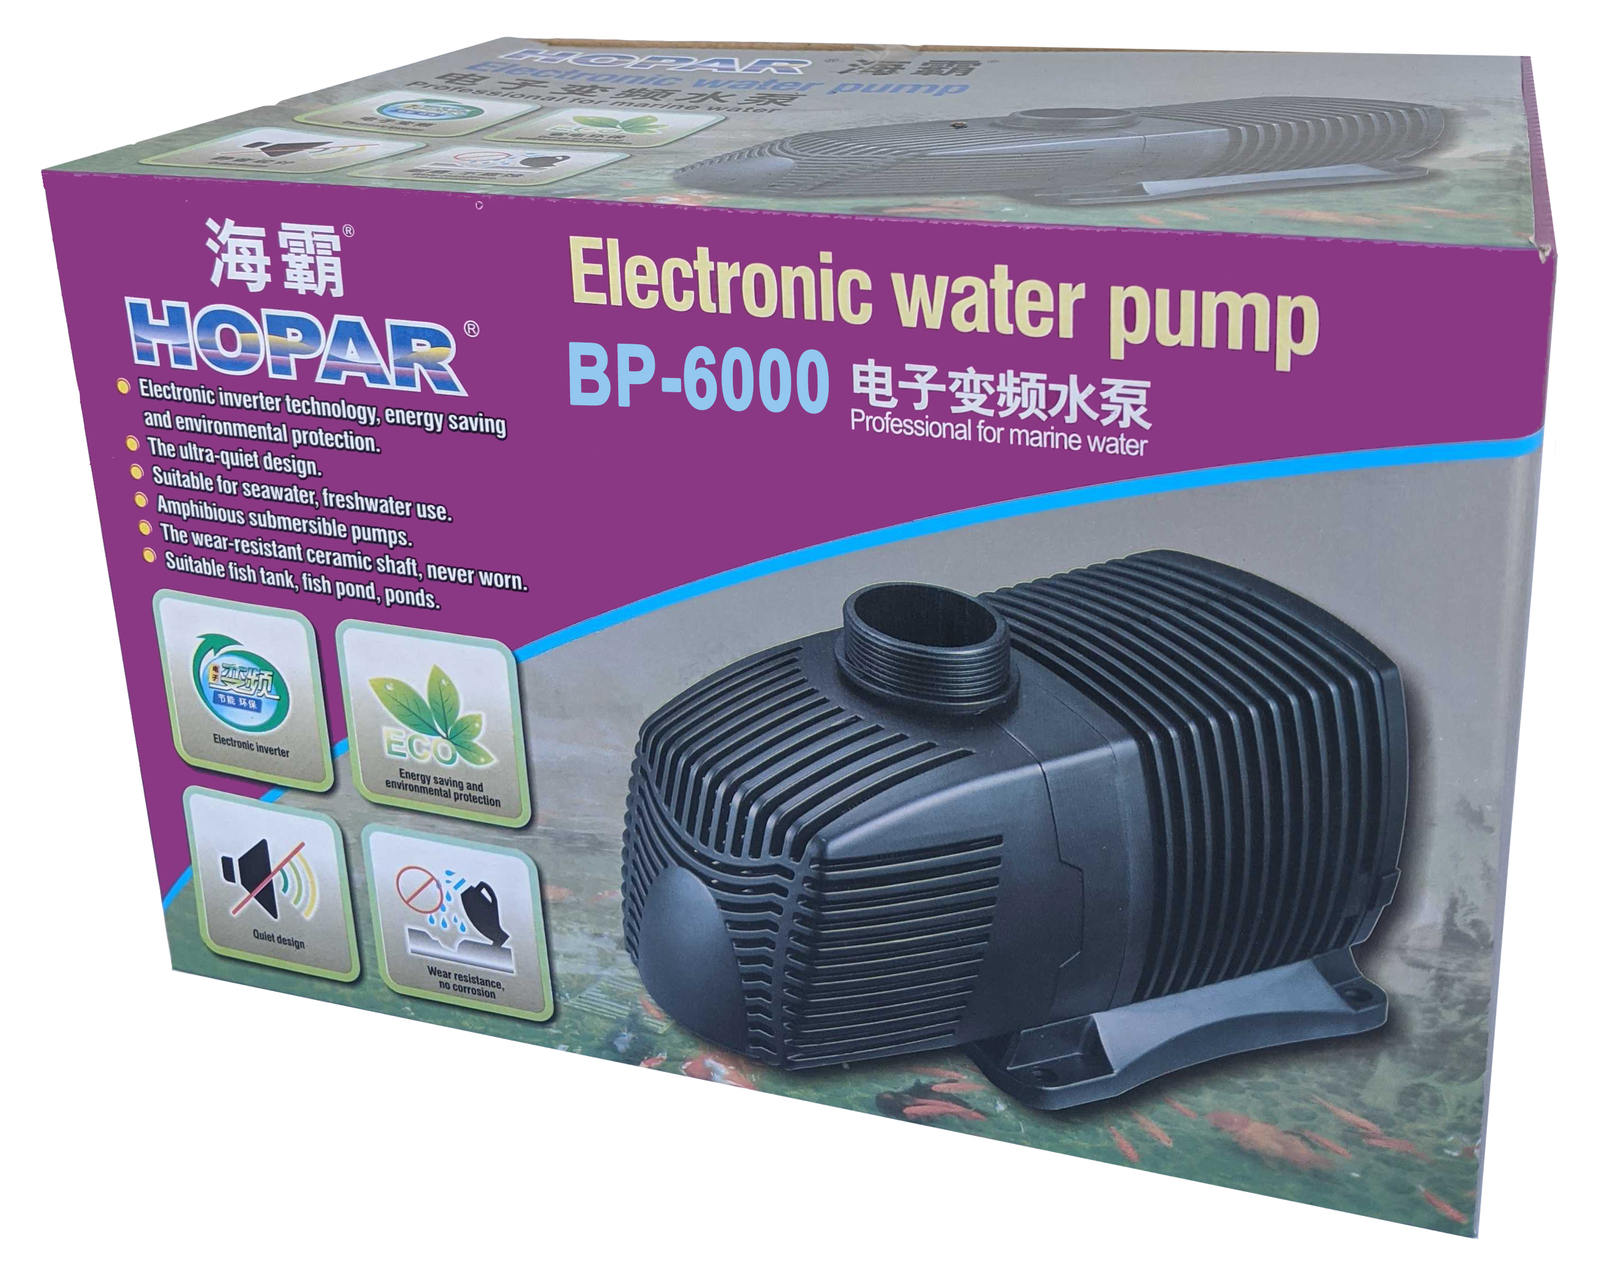 Biopro/Hopar Submersible Fountain Pump 6000lph ECO